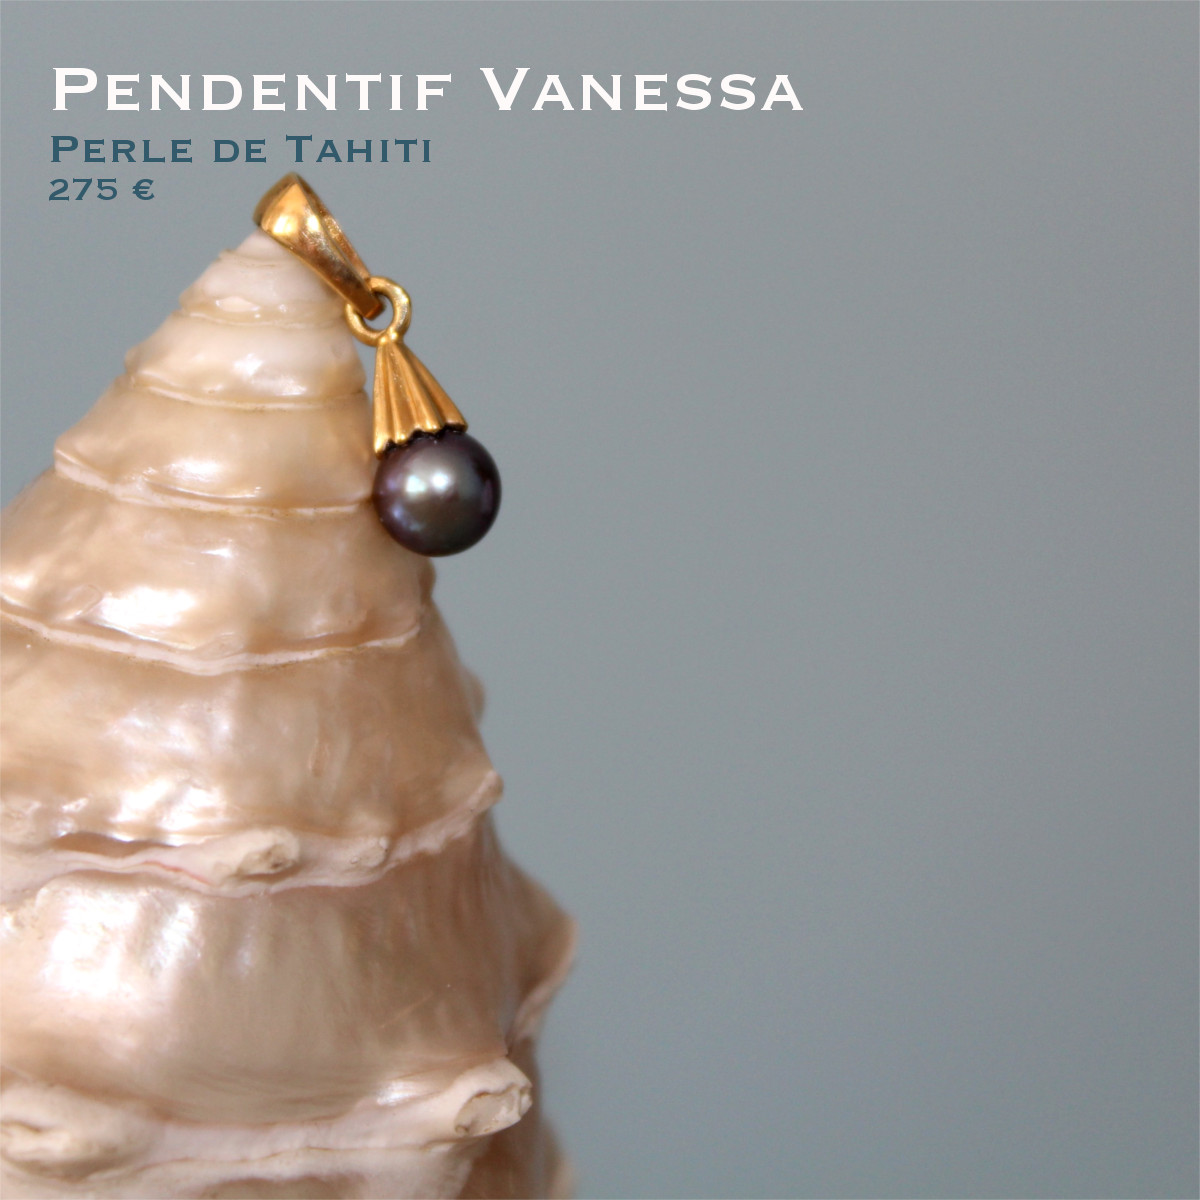 Pendentif Vanessa - Image 2 